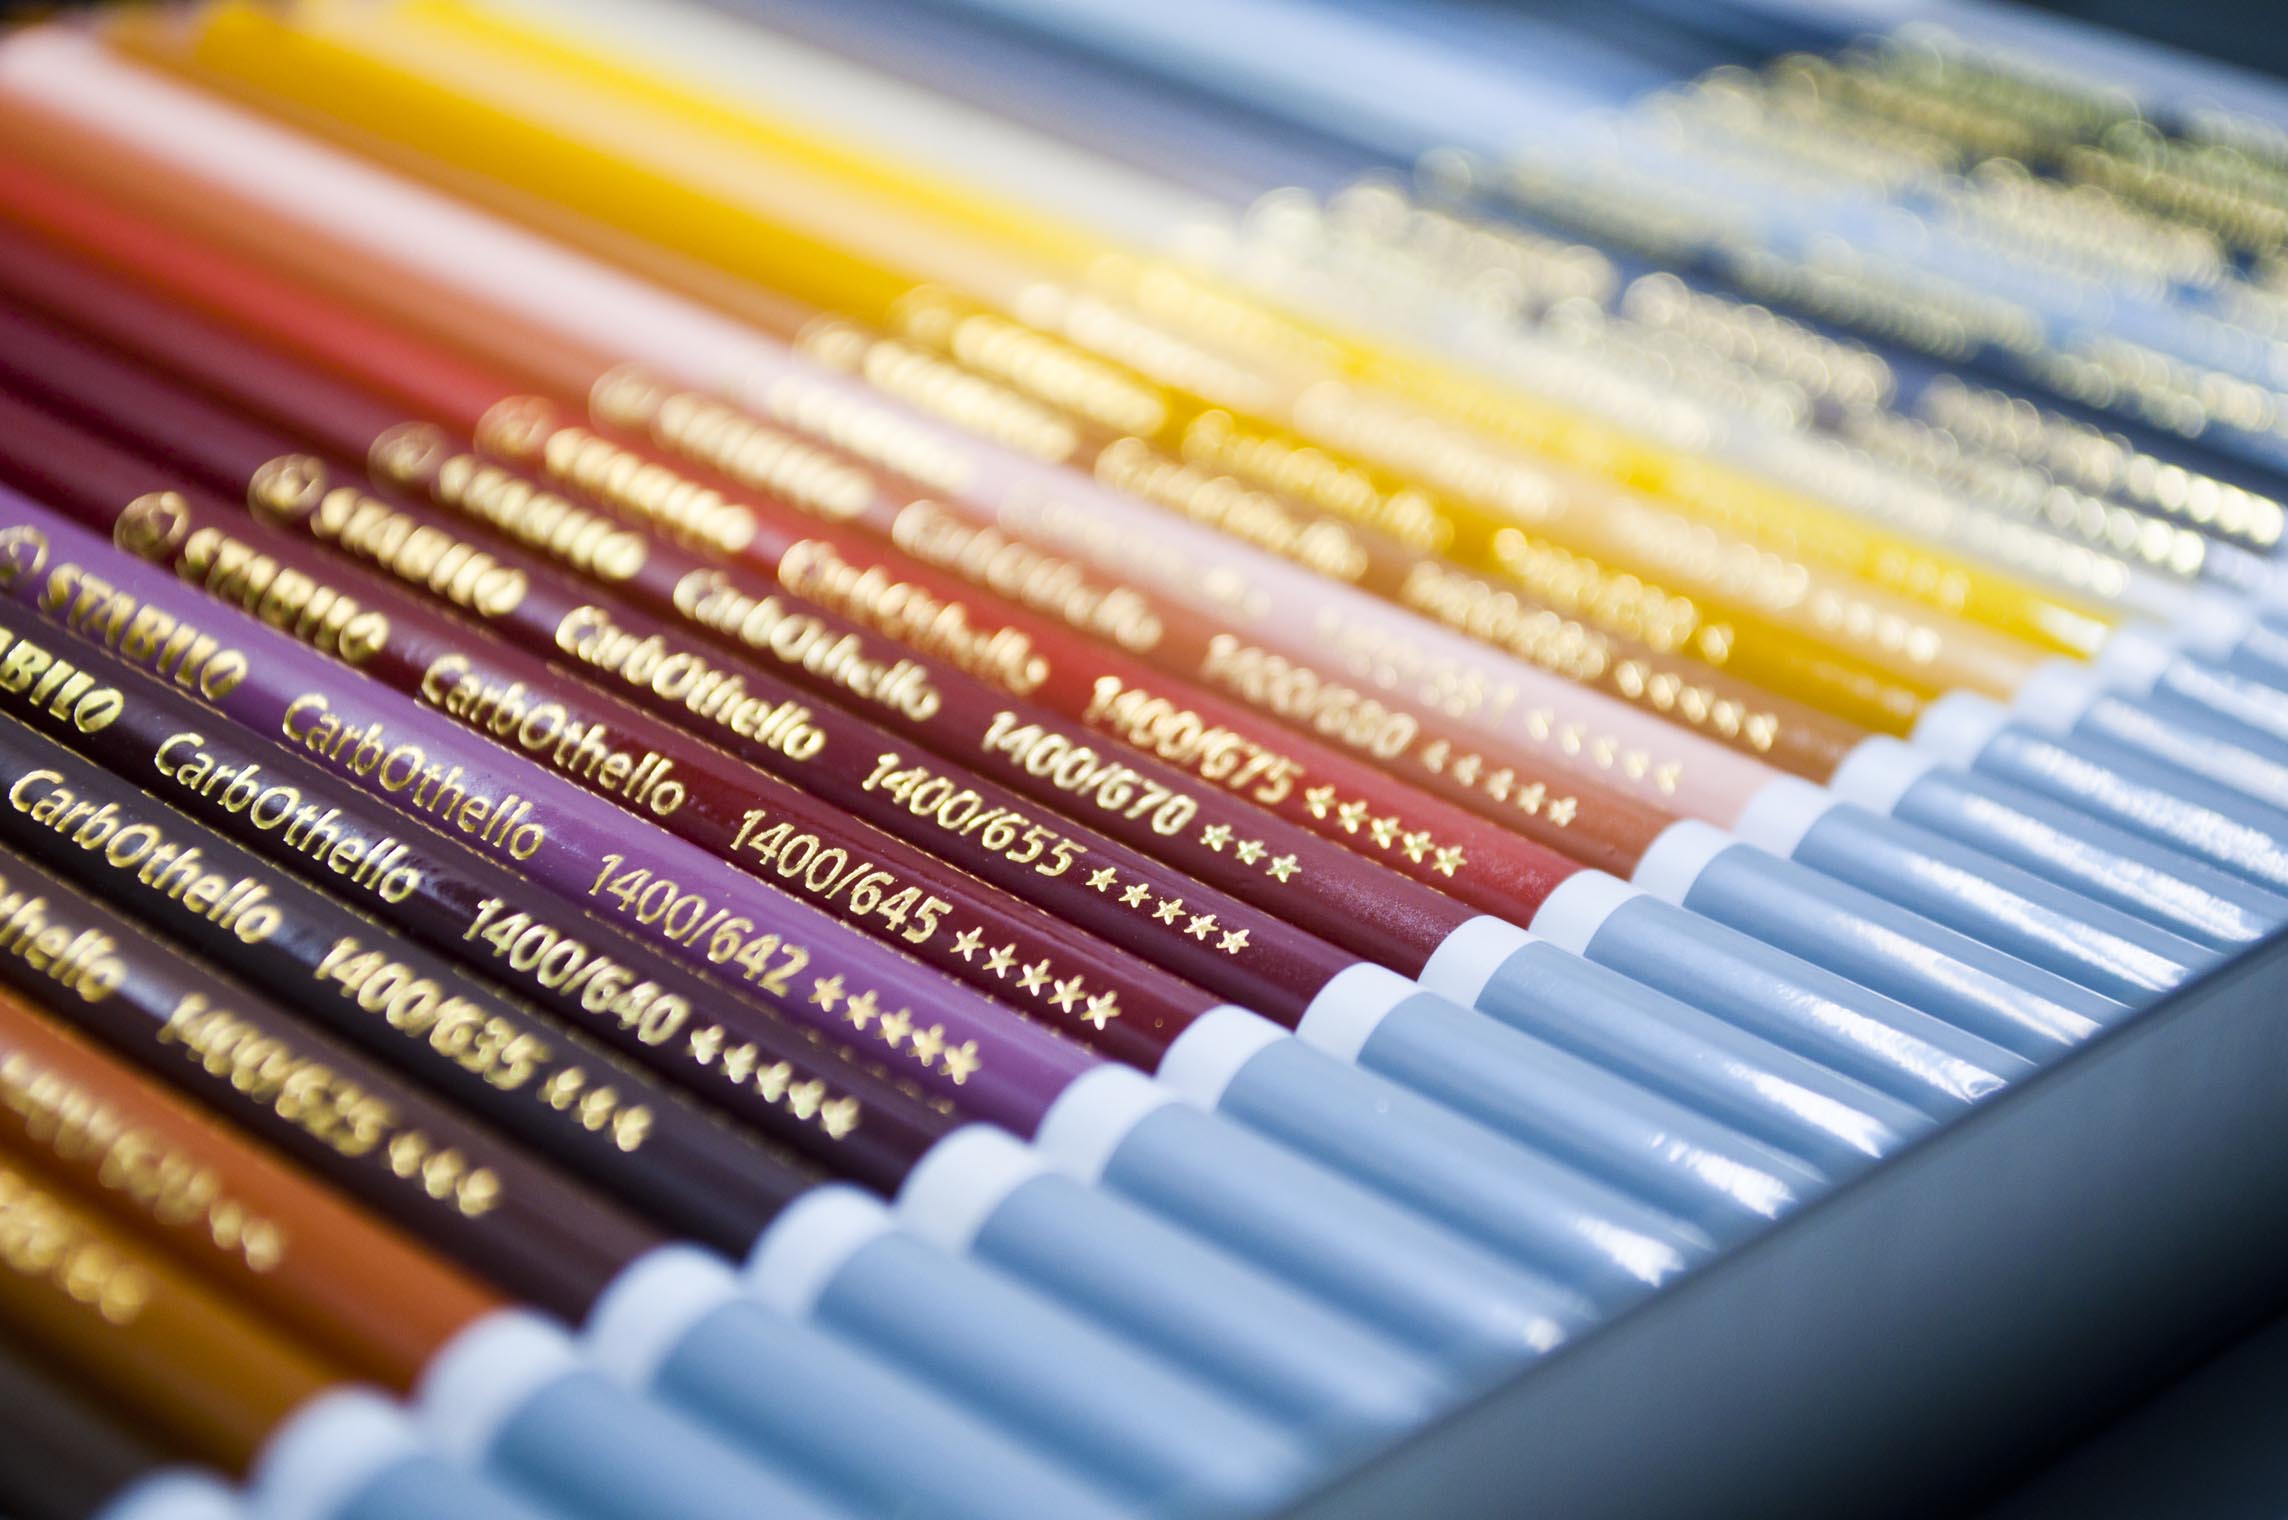 Carbothello Pastel Pencils Color Chart